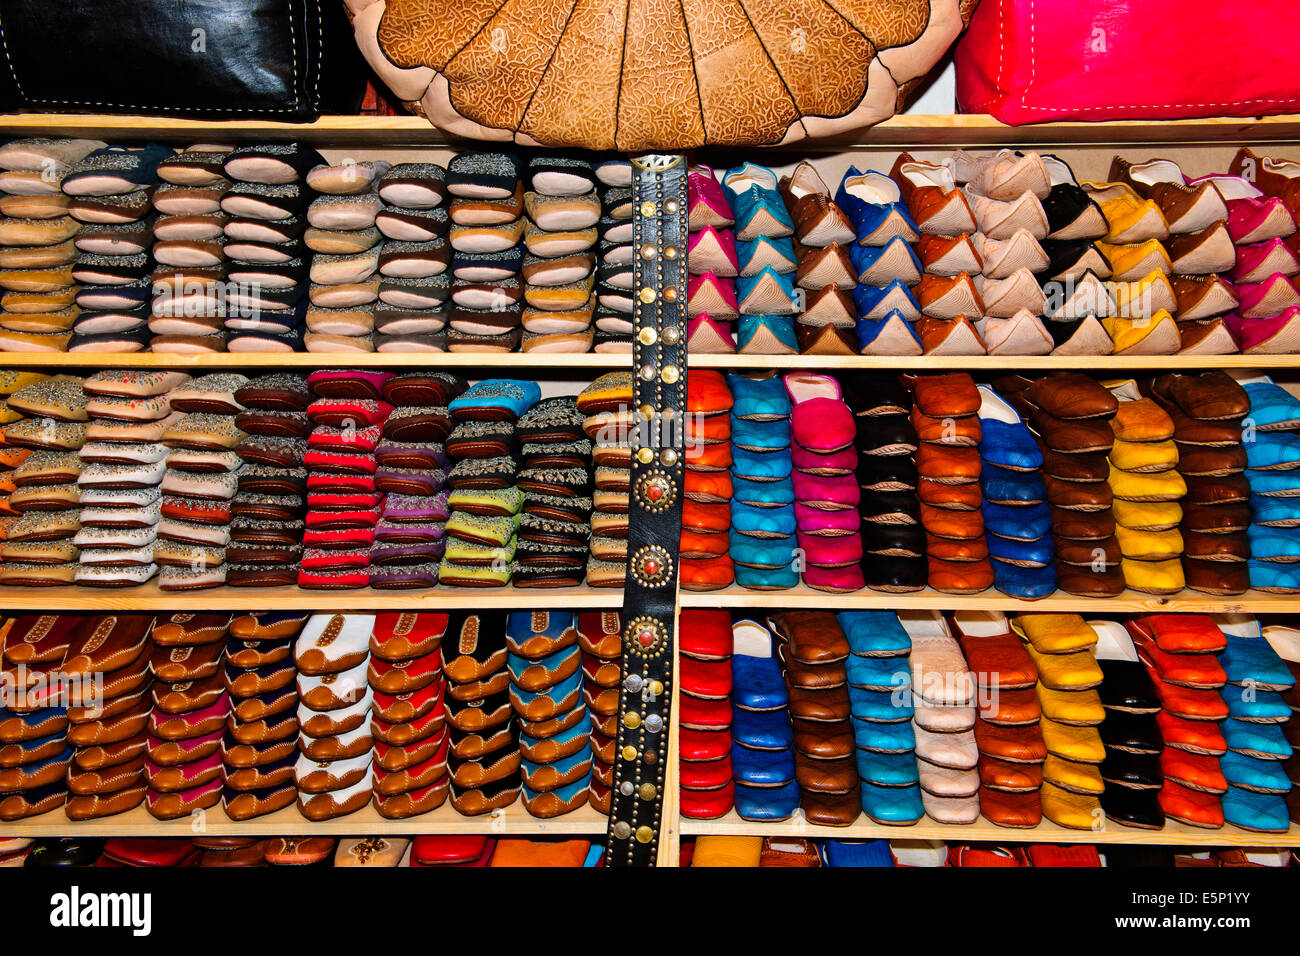 Fes, Leather District, sterben Gruben, Skins, Läden, die alle Arten von Lederwaren, Gerberei Chaouwara, Medina, Souk, Fes, Fez, Marokko Stockfoto